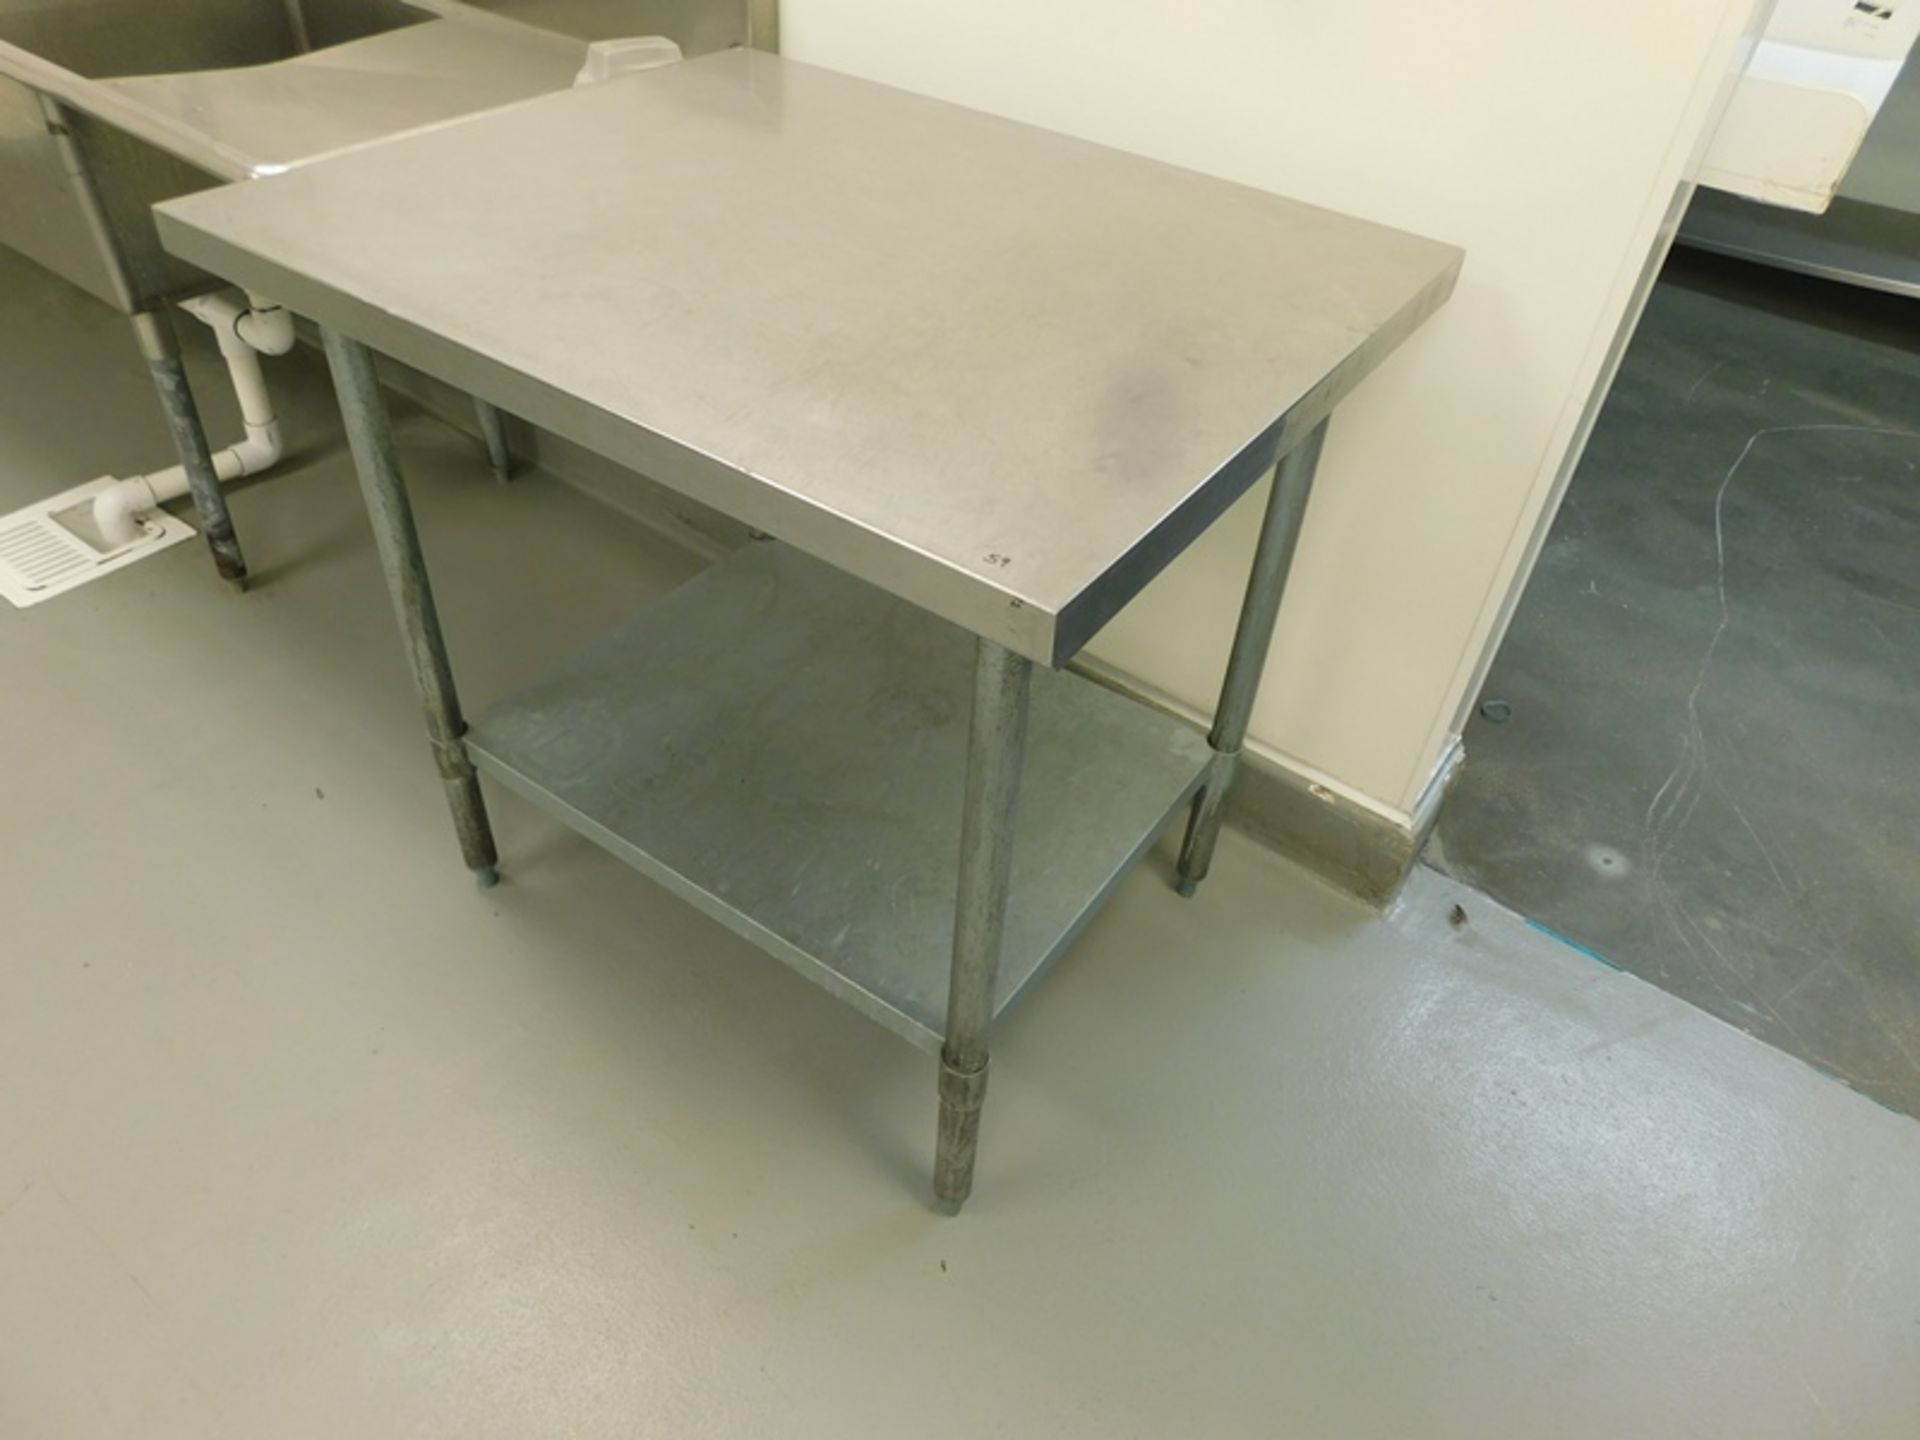 Lot Stainless Steel Tables, (1) 96" X 30" X 34", (2) 48" X 30" X 34", galvanized bottom shelf - ( - Image 4 of 4